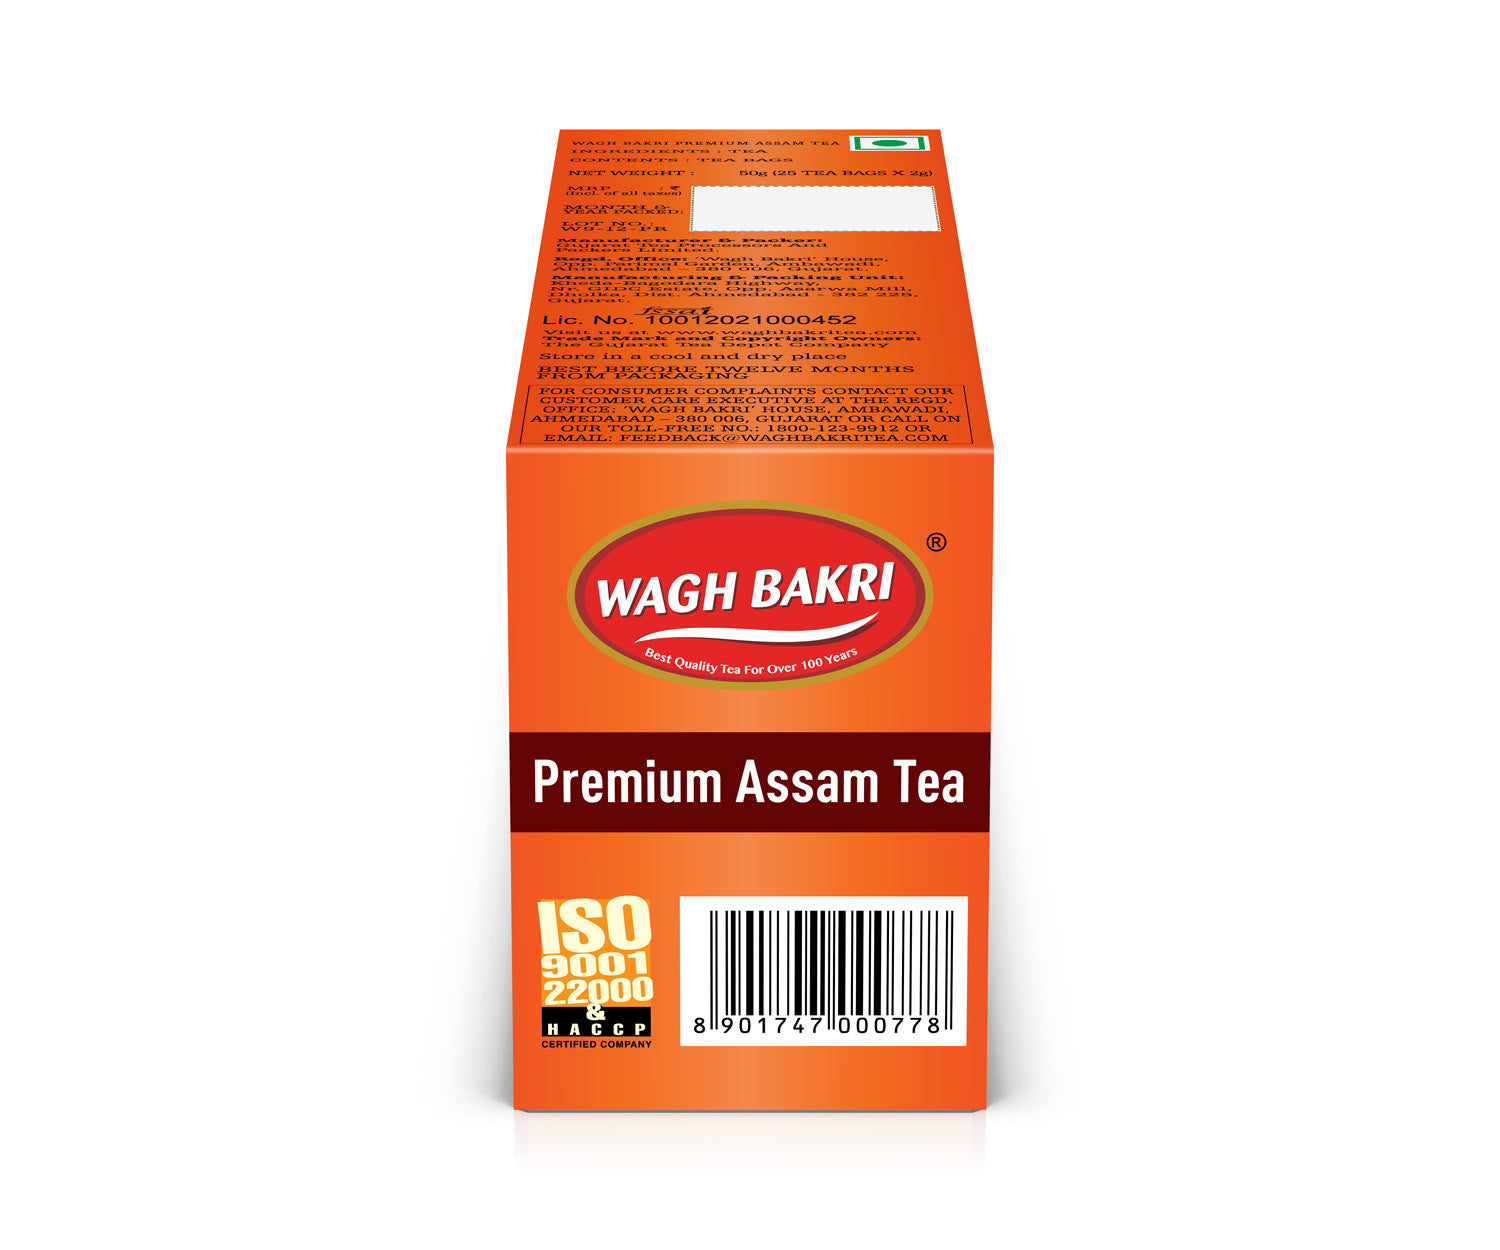 Wagh Bakri Premium Assam Tea Bags